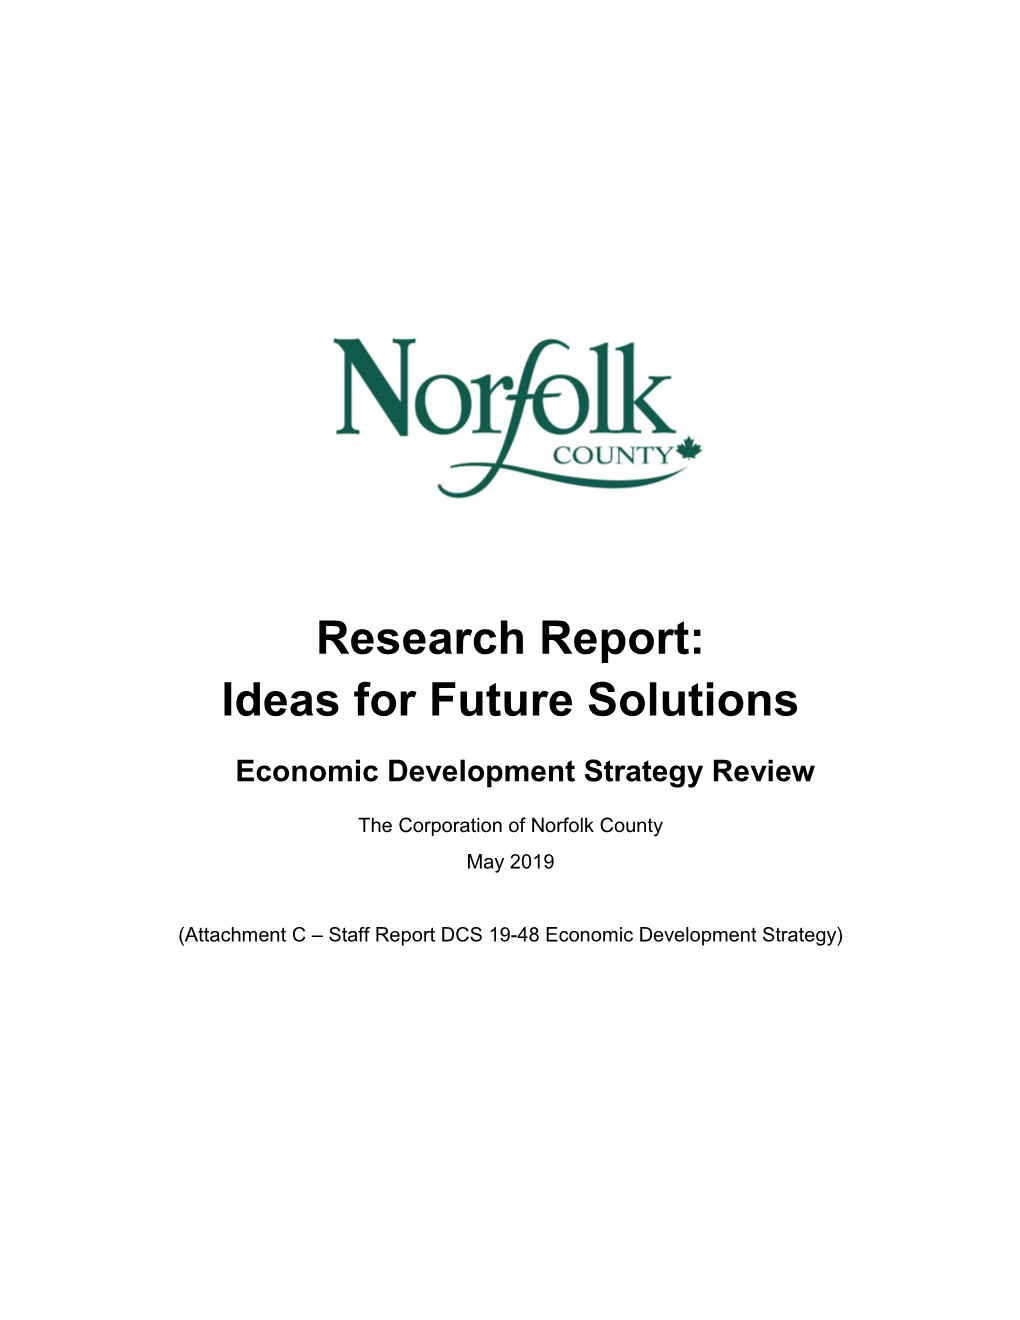 Norfolk County Economic Development Strategy 2019